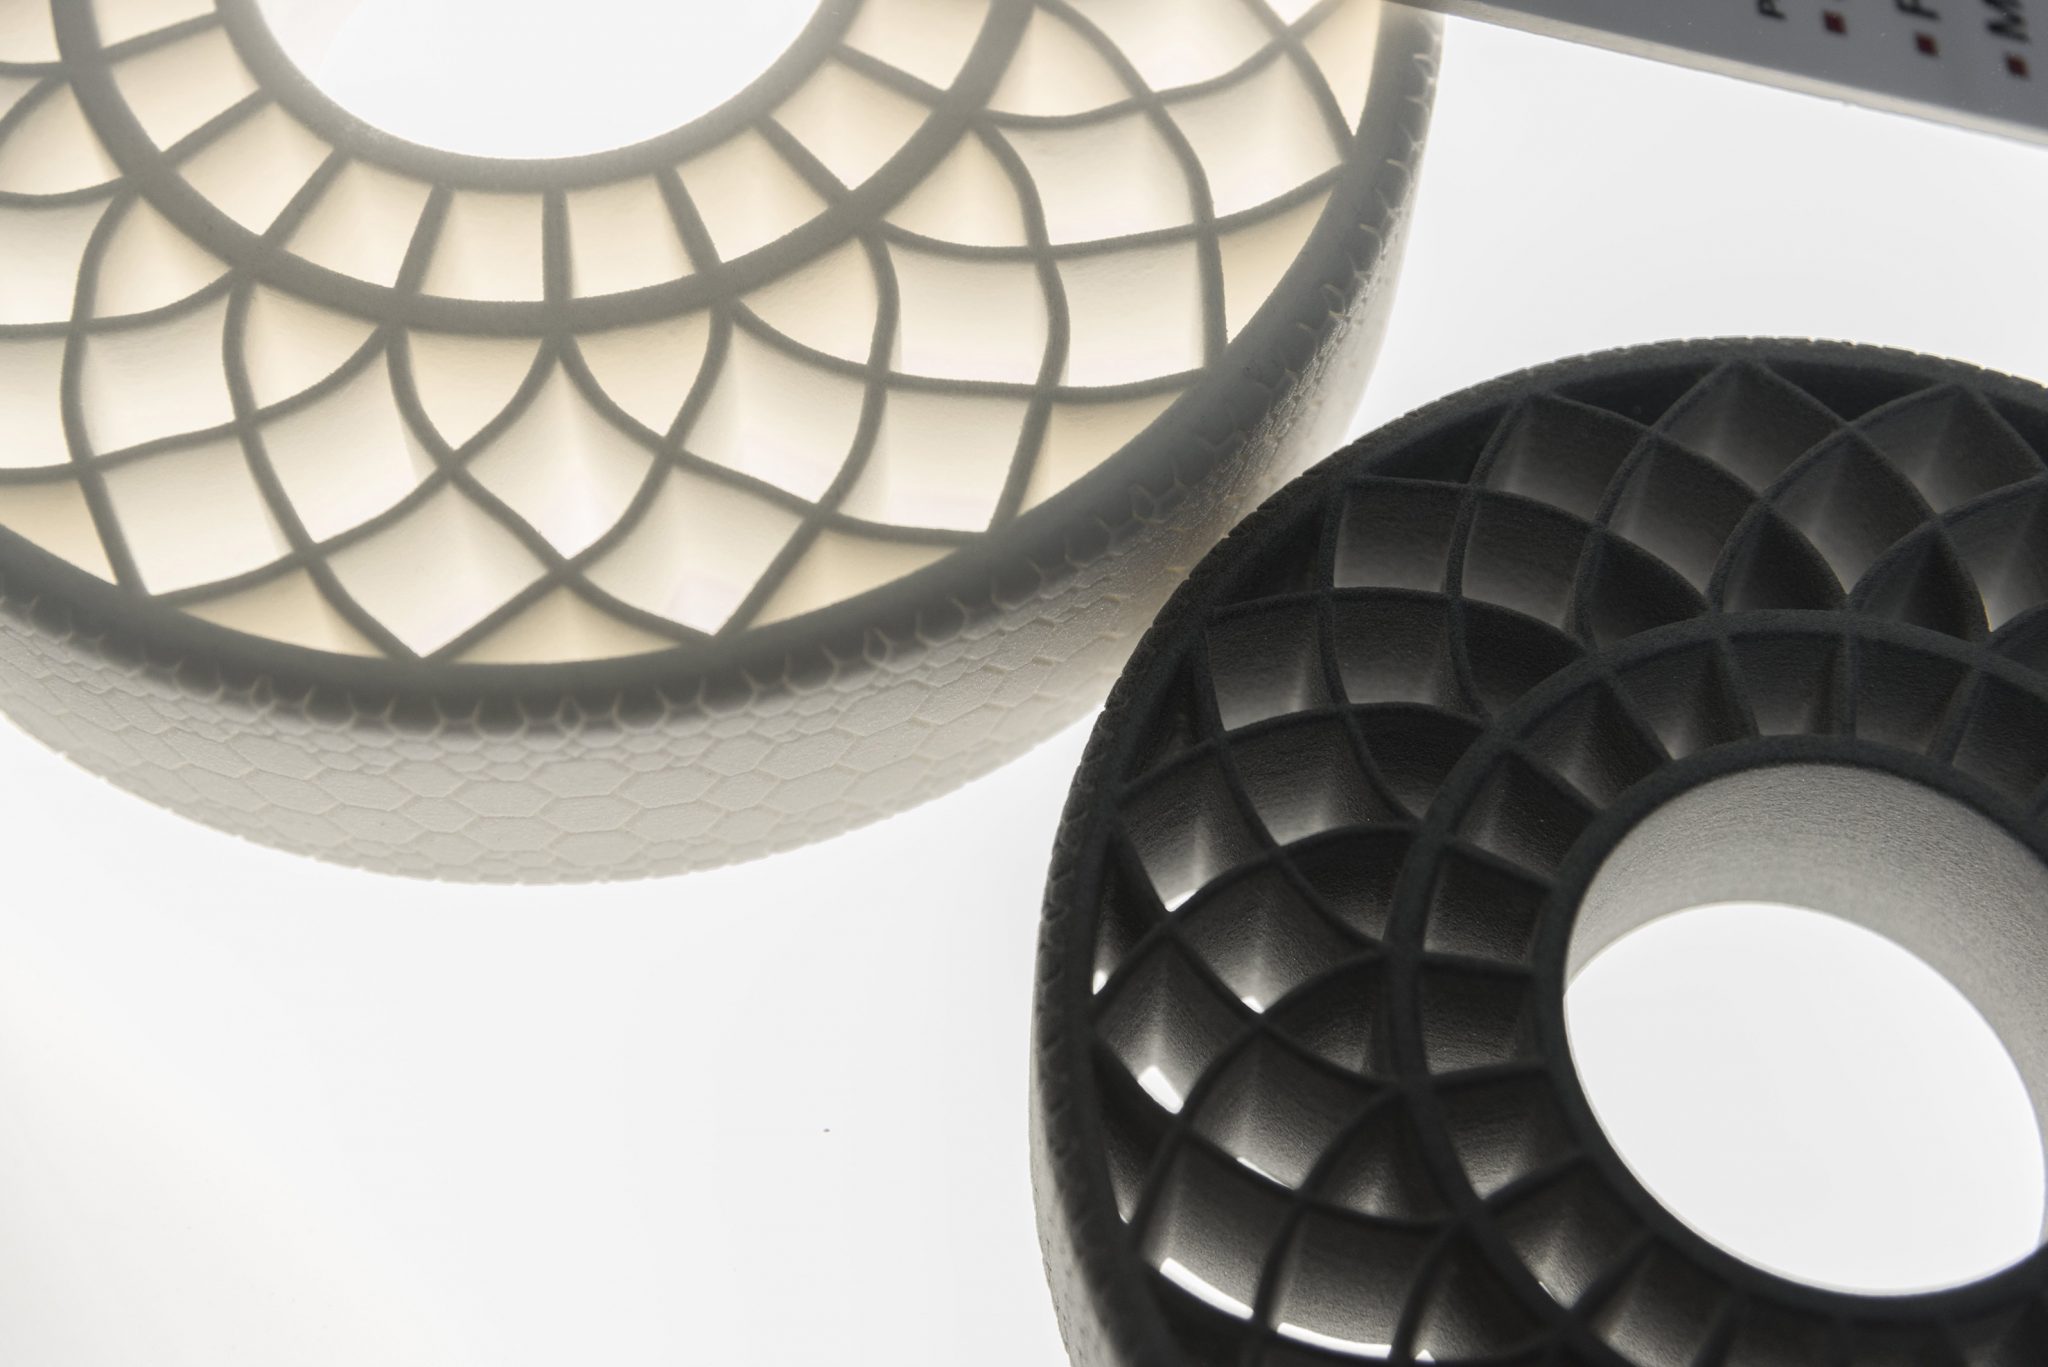 3D printed airless tires that used BASF thermoplastic polyurethane (TPU). Image via BASF.